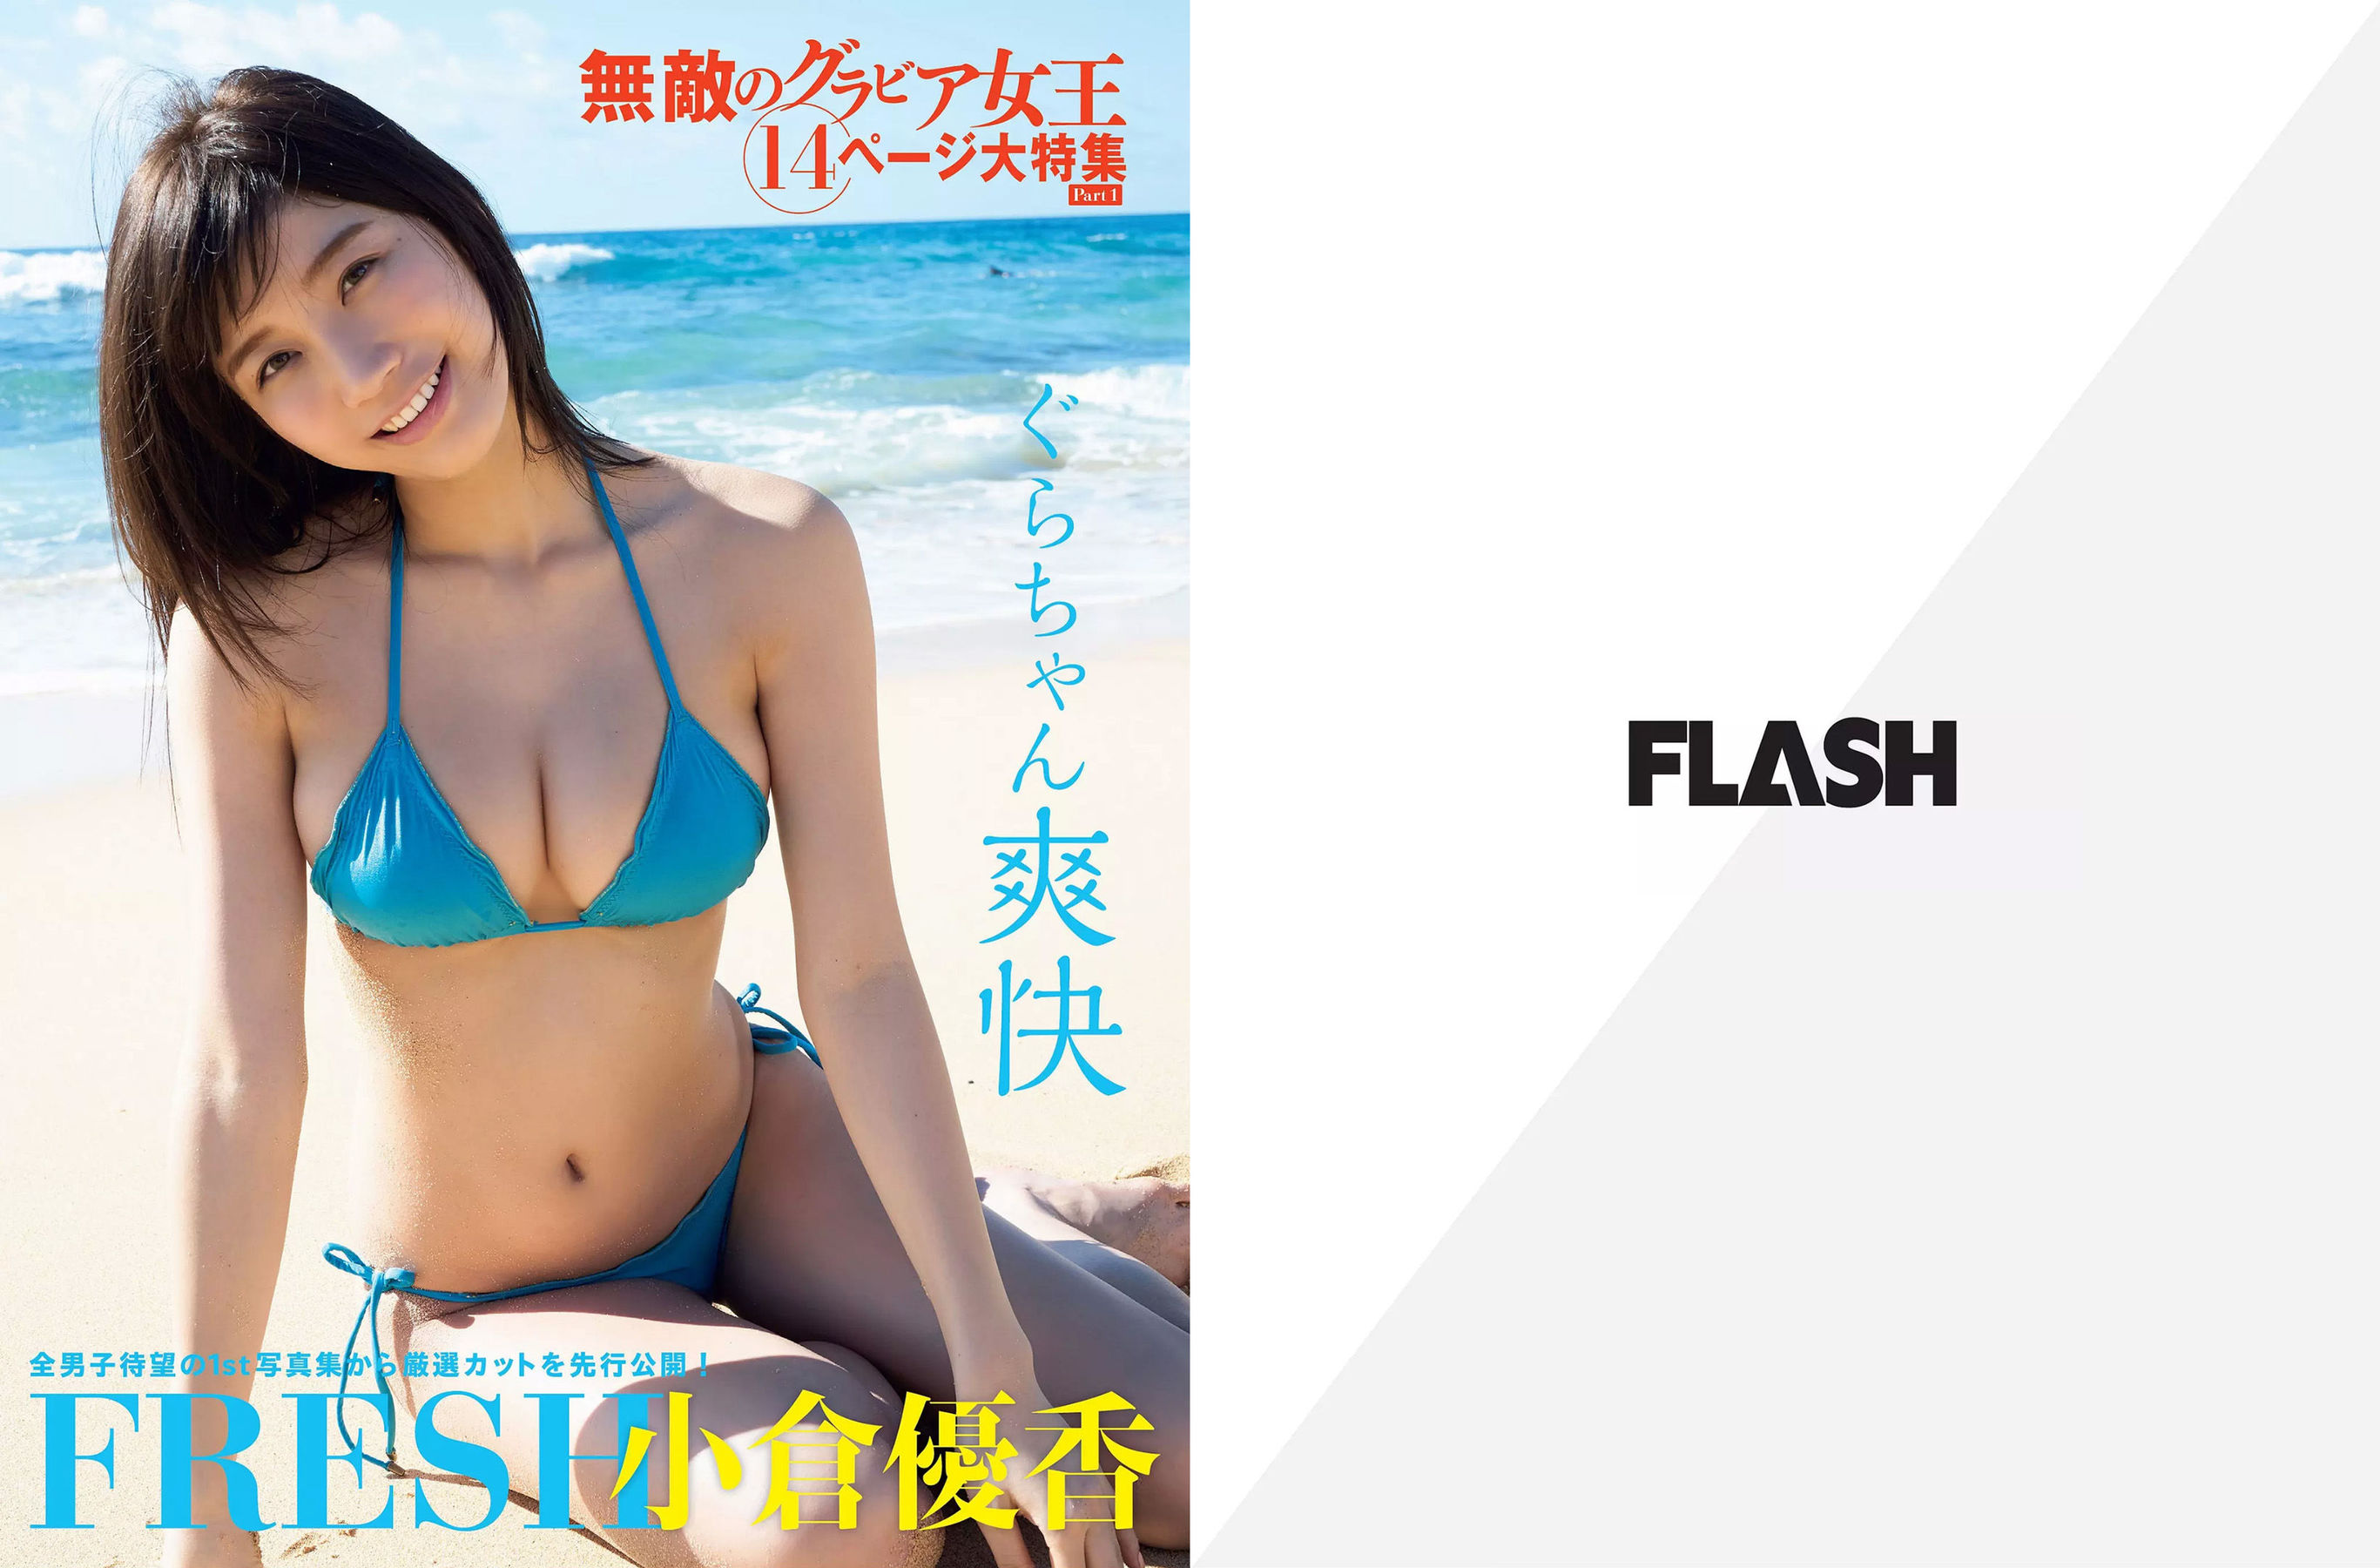 [FLASH]杂志:小仓优香高品质写真作品个人分享(25P)